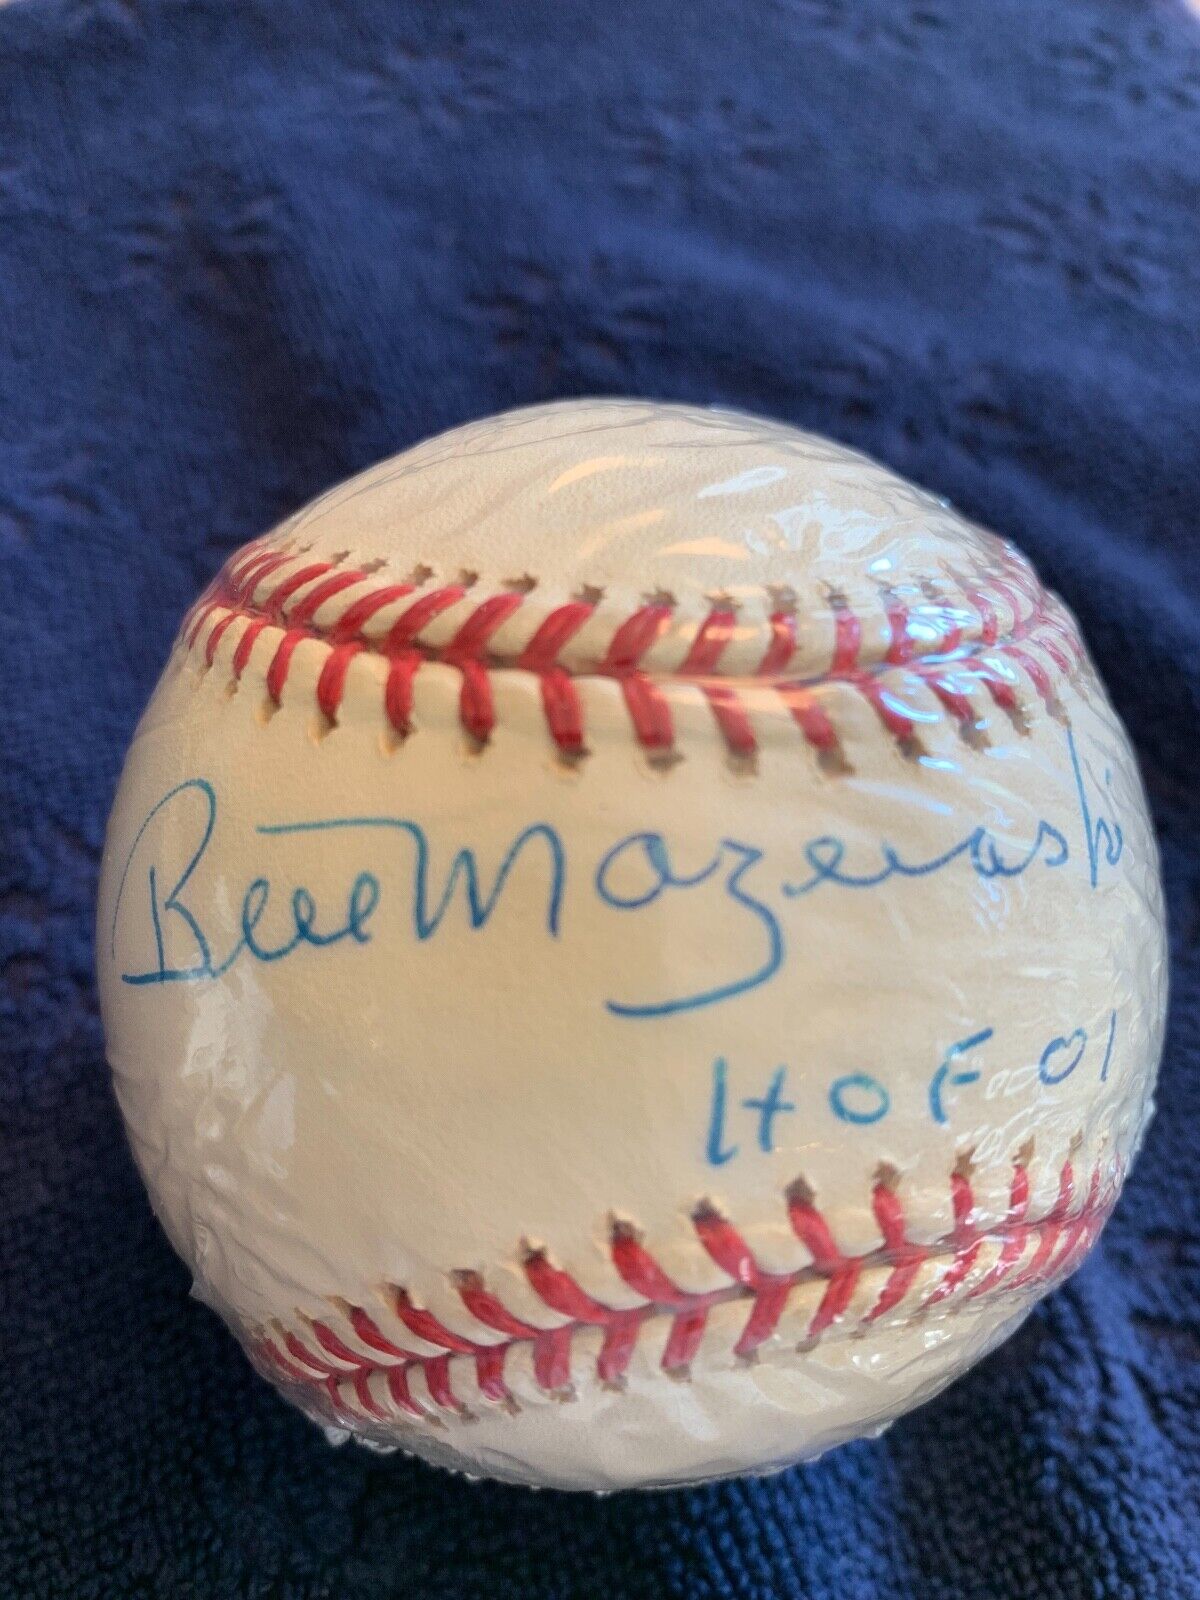 Bill Mazeroski HOF 01 Autographed ONL Leonard S Coleman Baseball w/COA Vintage